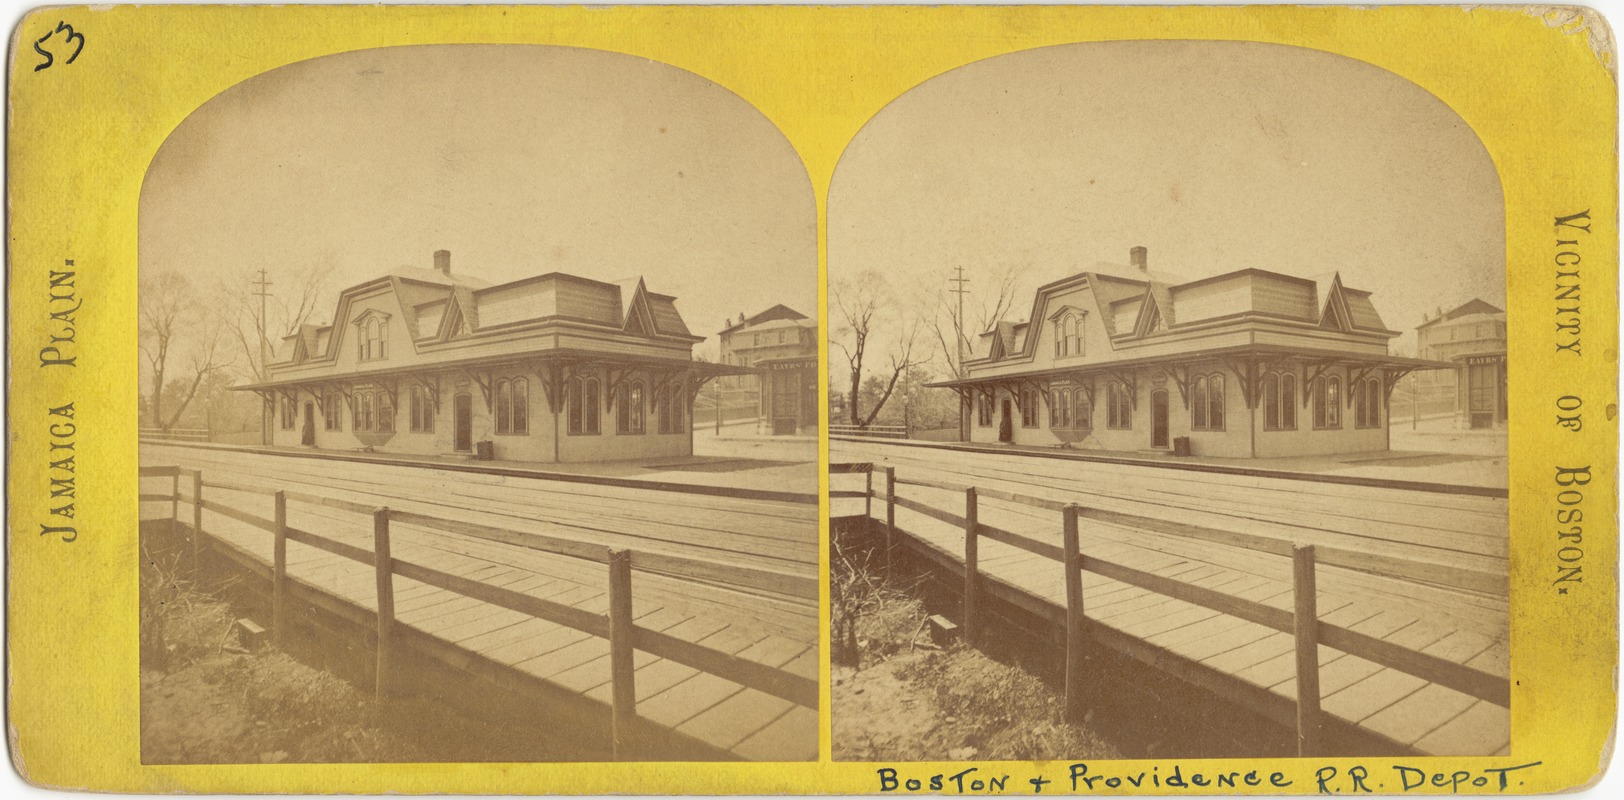 Boston & Providence Railroad Depot